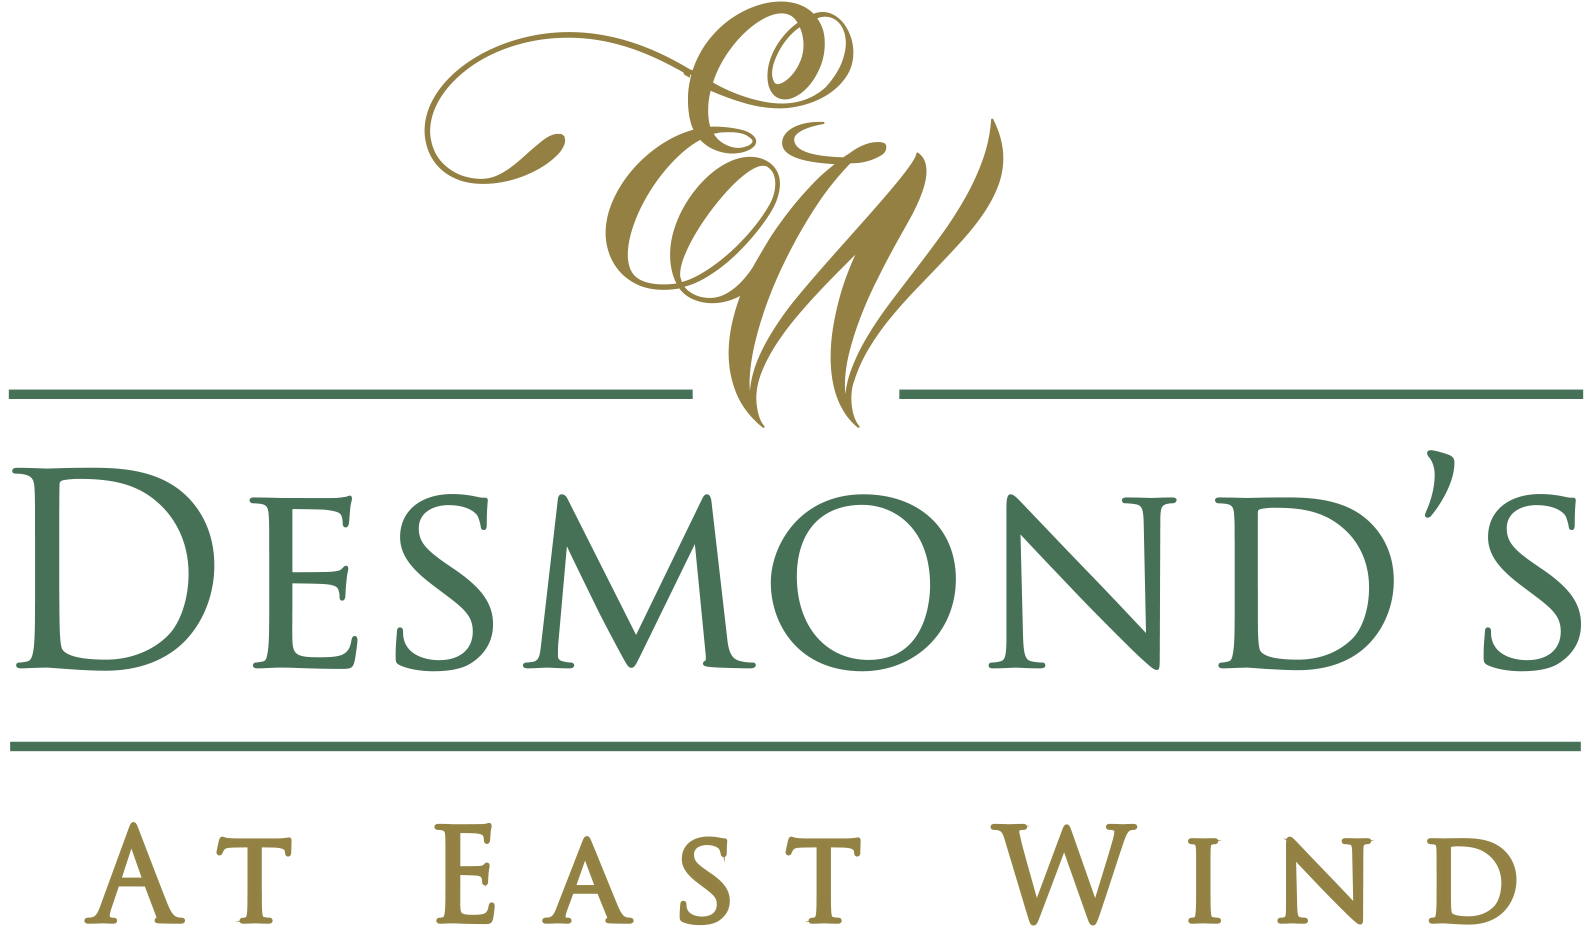 Desmond's Restaurant at East Wind